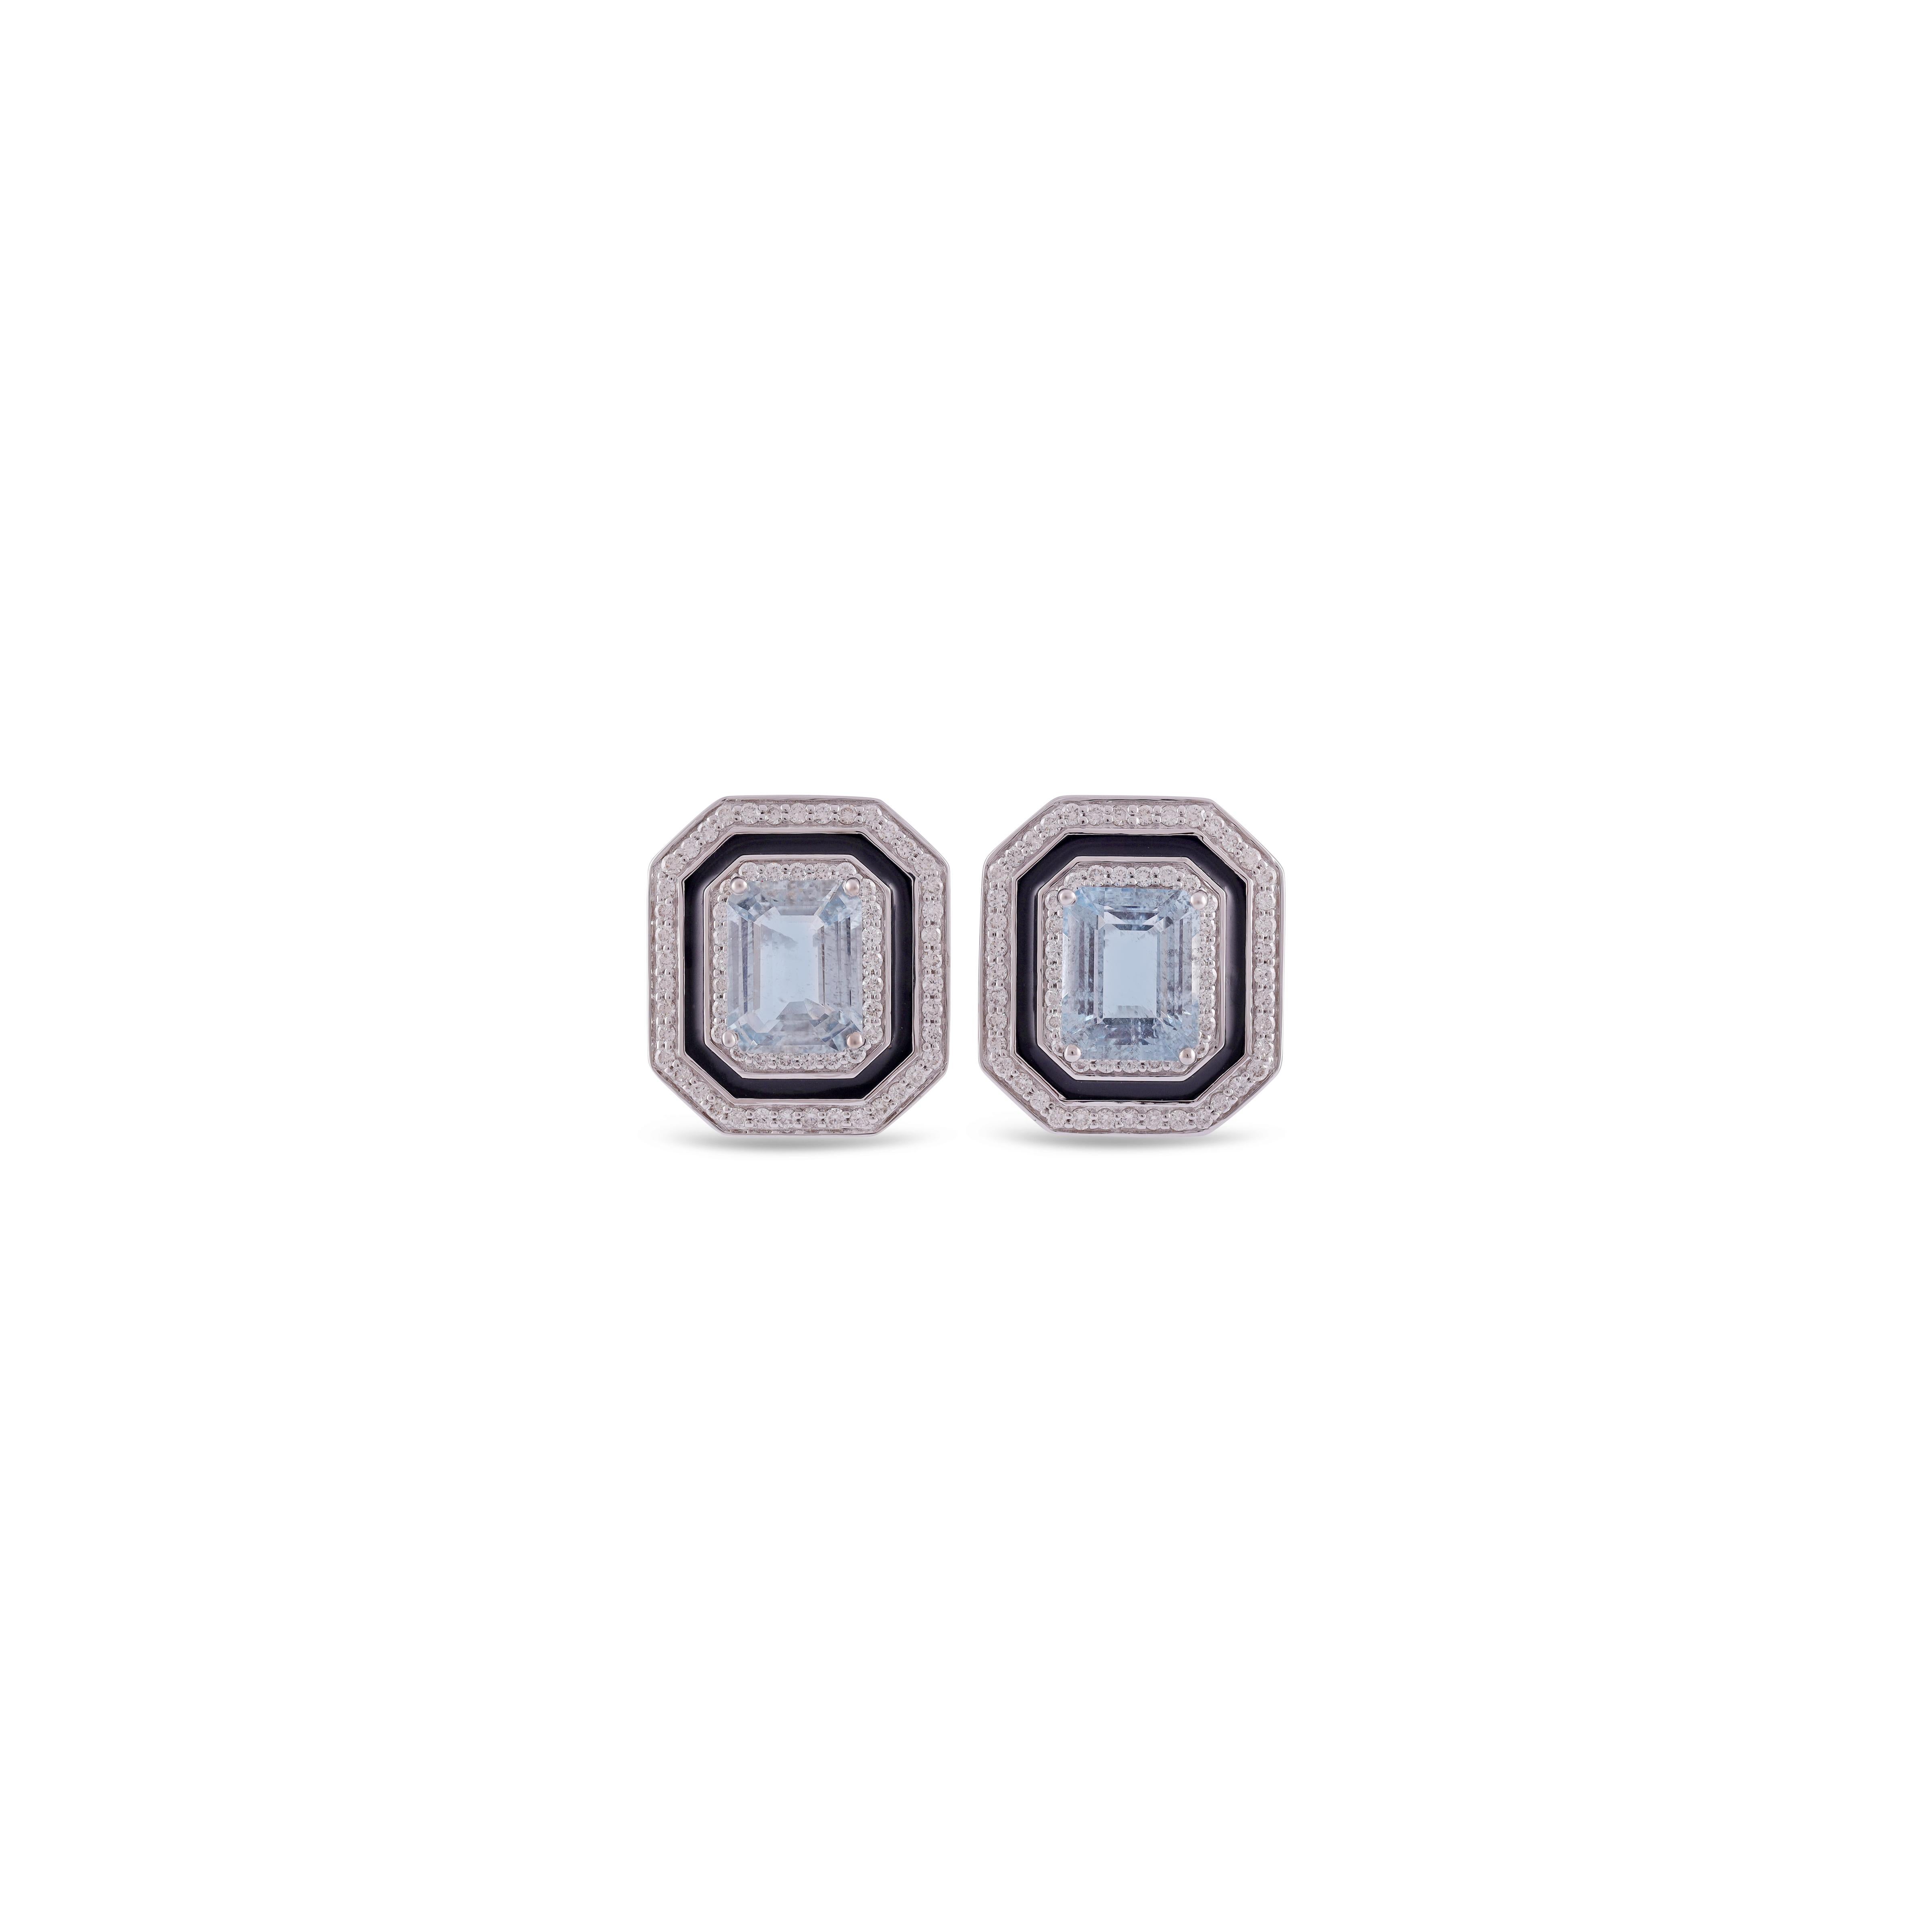 Modernist 5.03 Carat Clear Aquamarine & Enamel Earring Studs in 18k White Gold